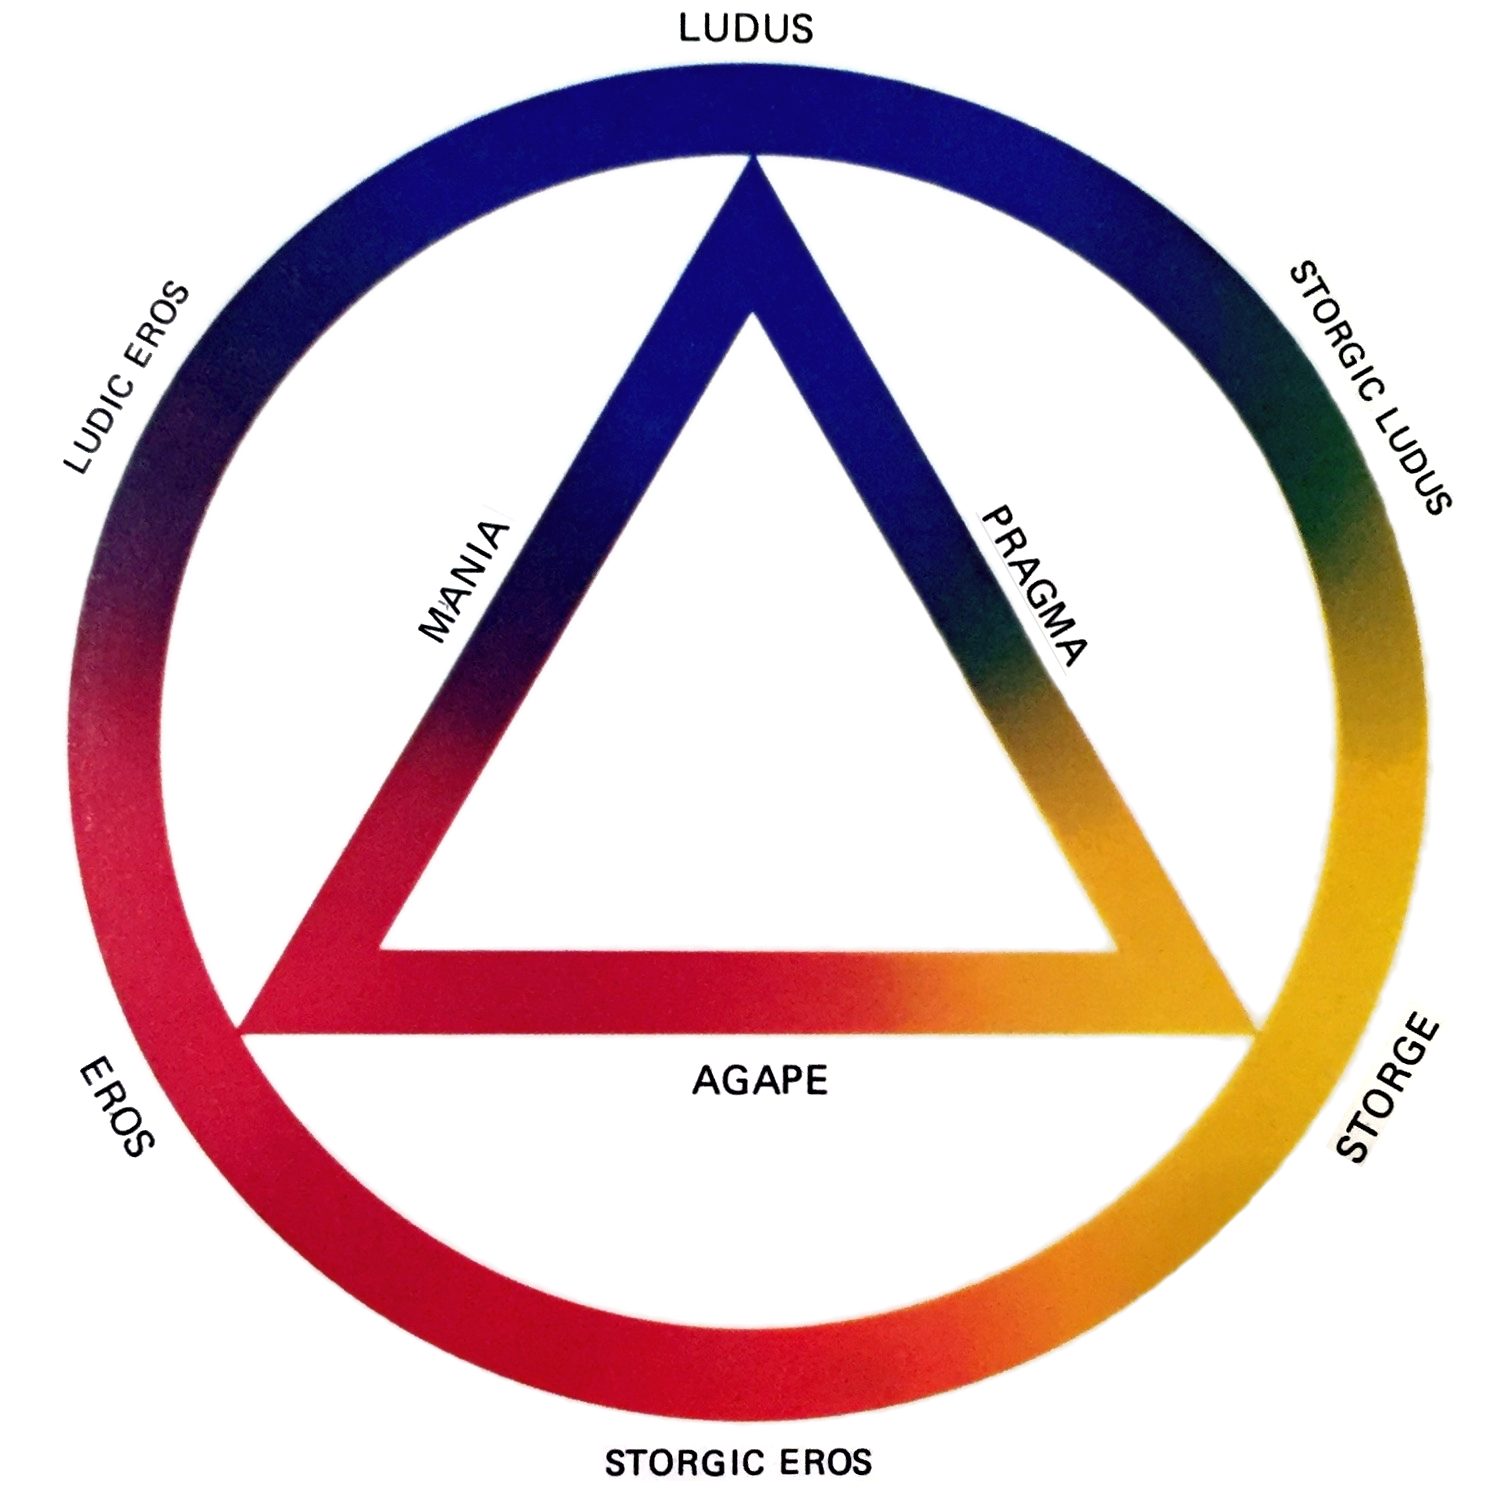 The Colour Wheel of Love diagram.